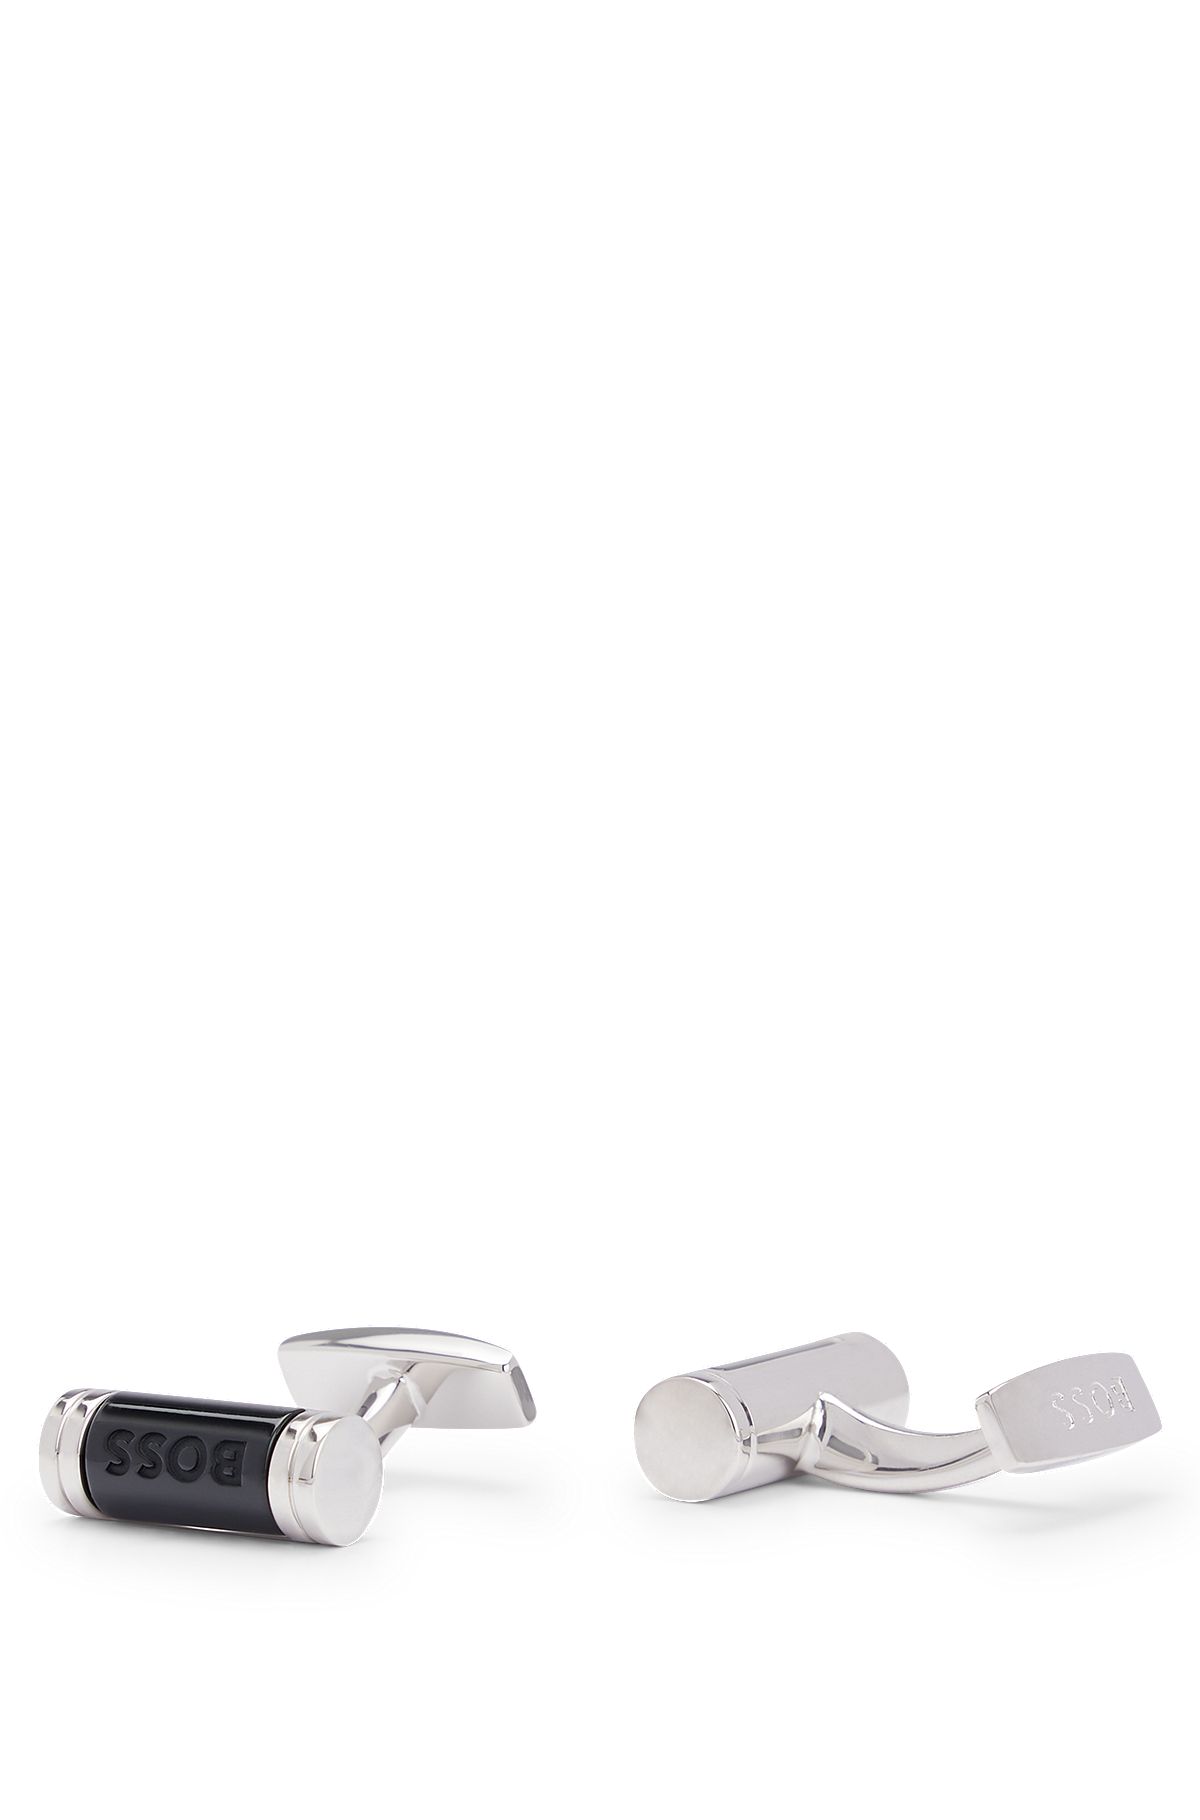 Louis Vuitton Monogram Bold Tie Pin, Silver, One Size